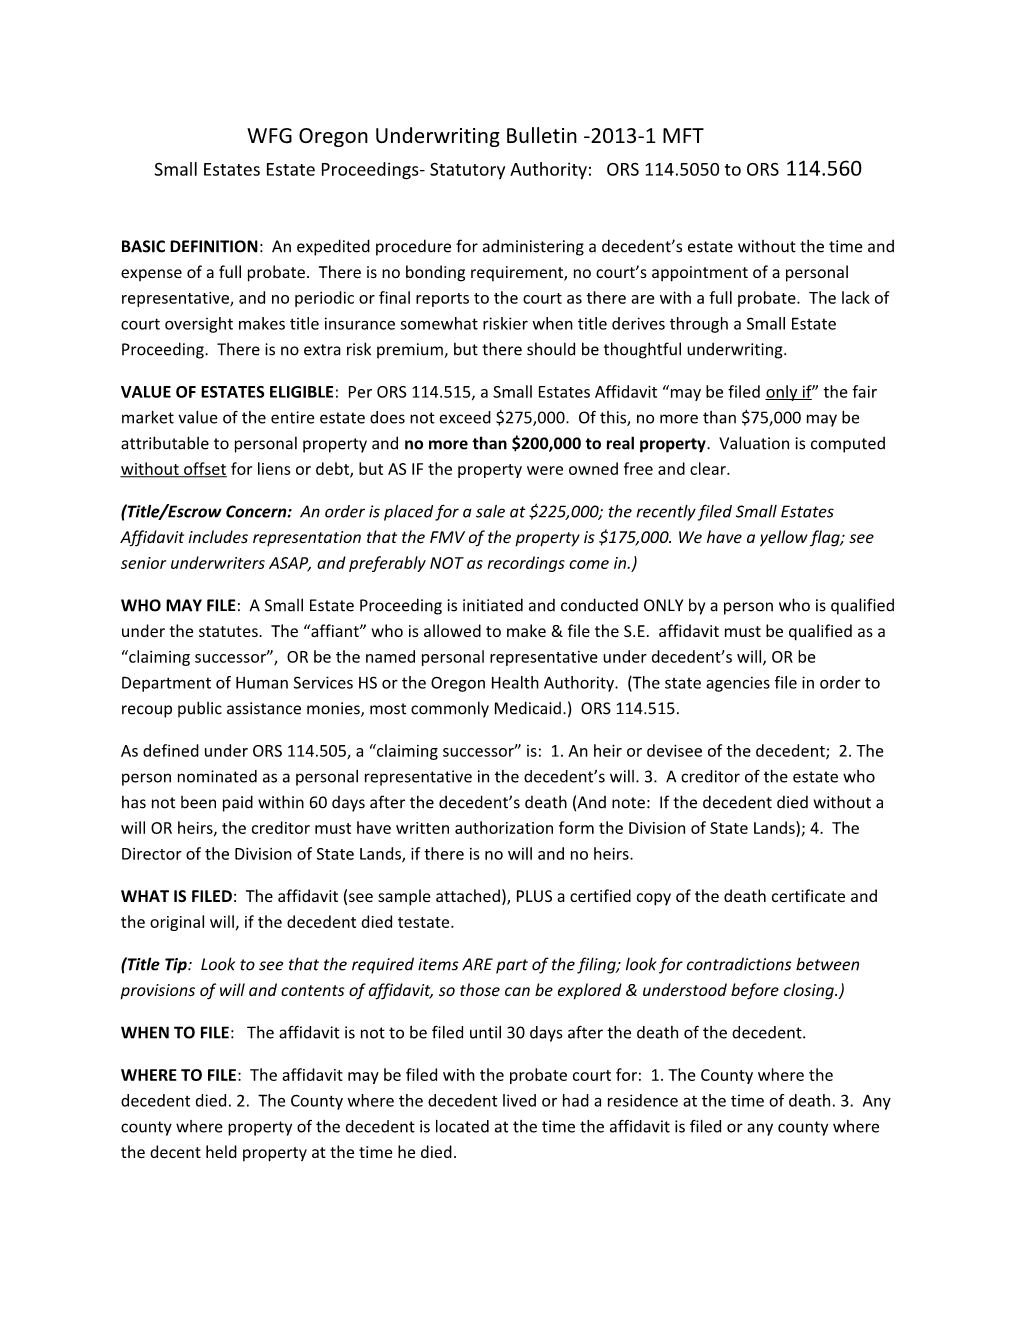 WFG Oregon Underwriting Bulletin -2013-1 MFT Small Estates Estate Proceedings-Statutory